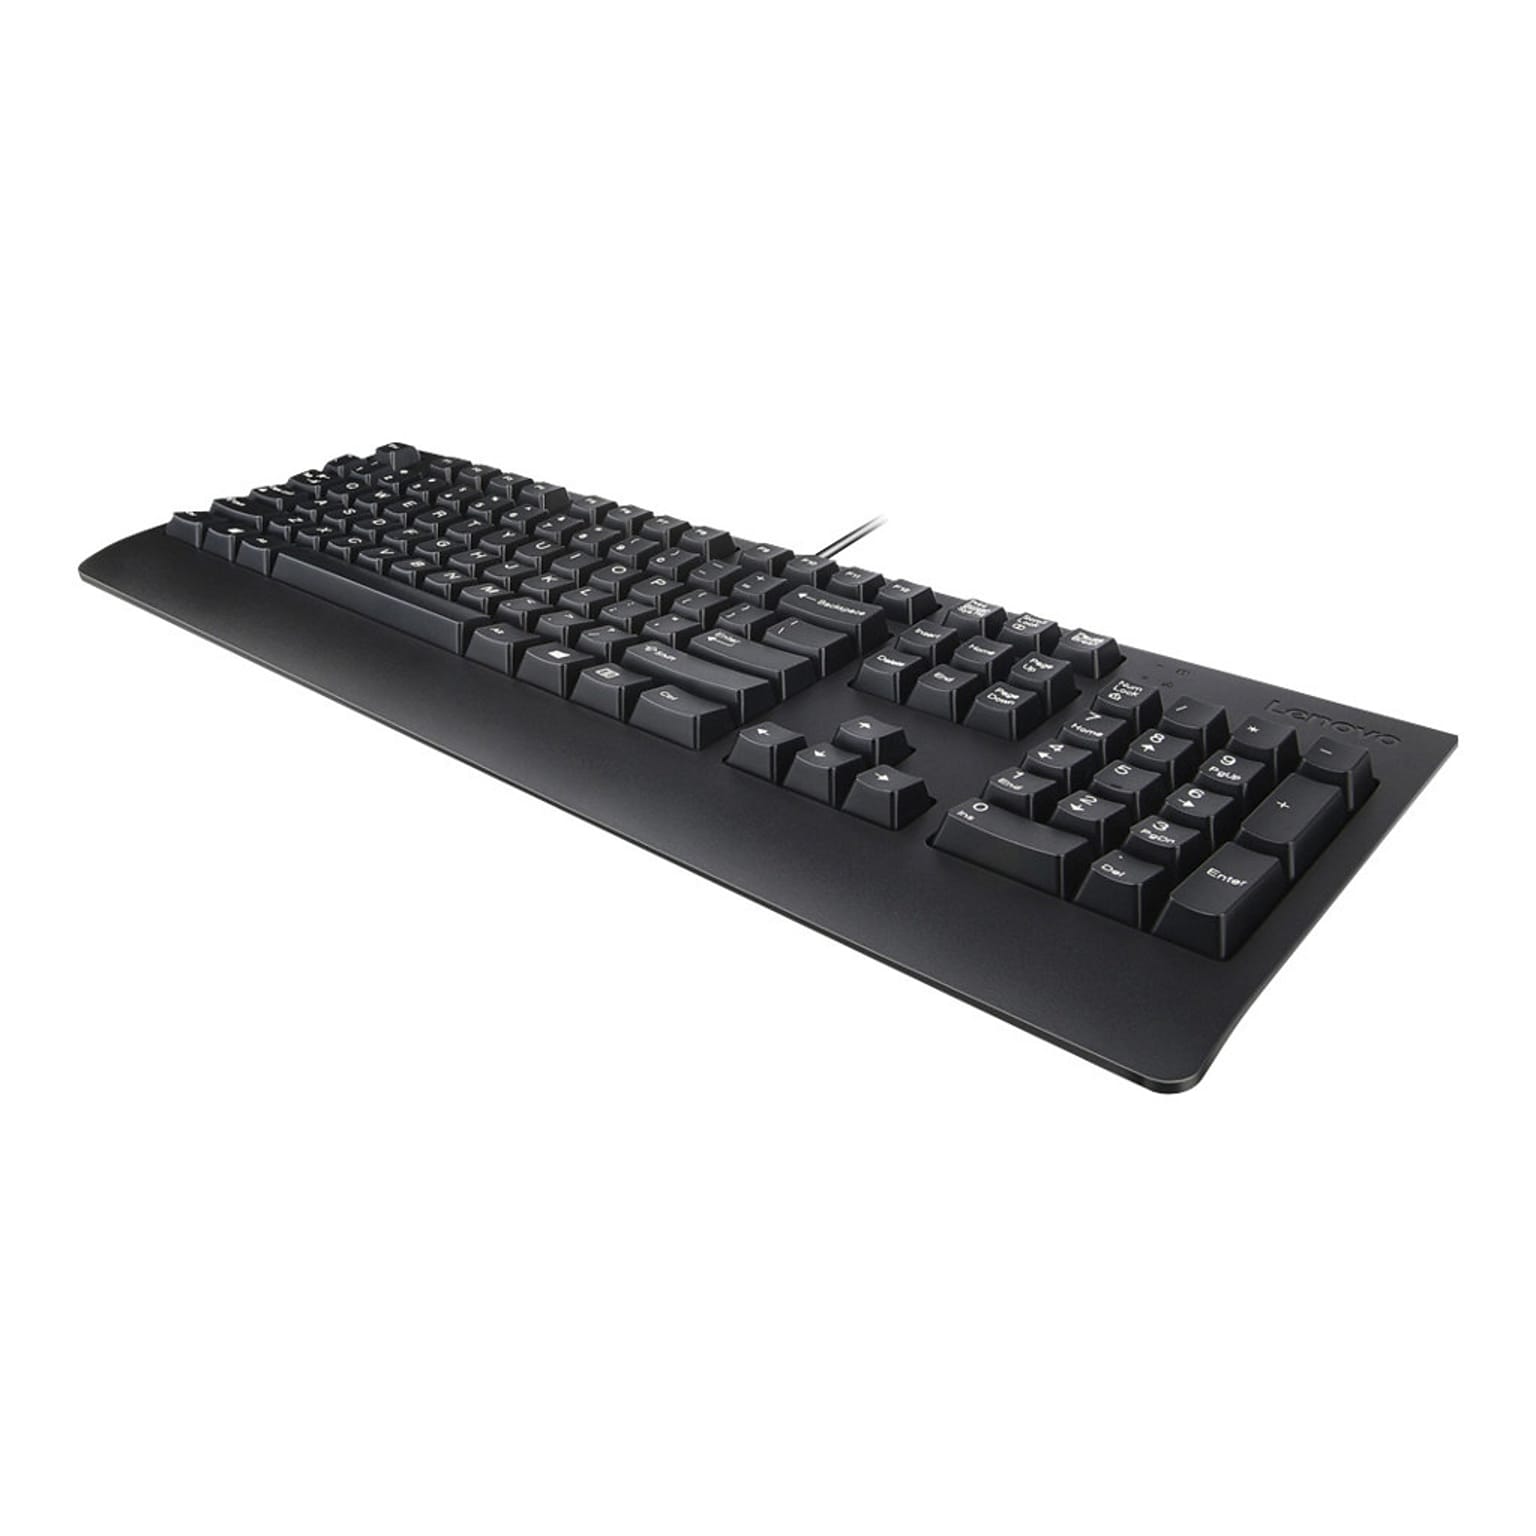 Lenovo Preferred Pro II Wired Keyboard, Black (4X30M86879)